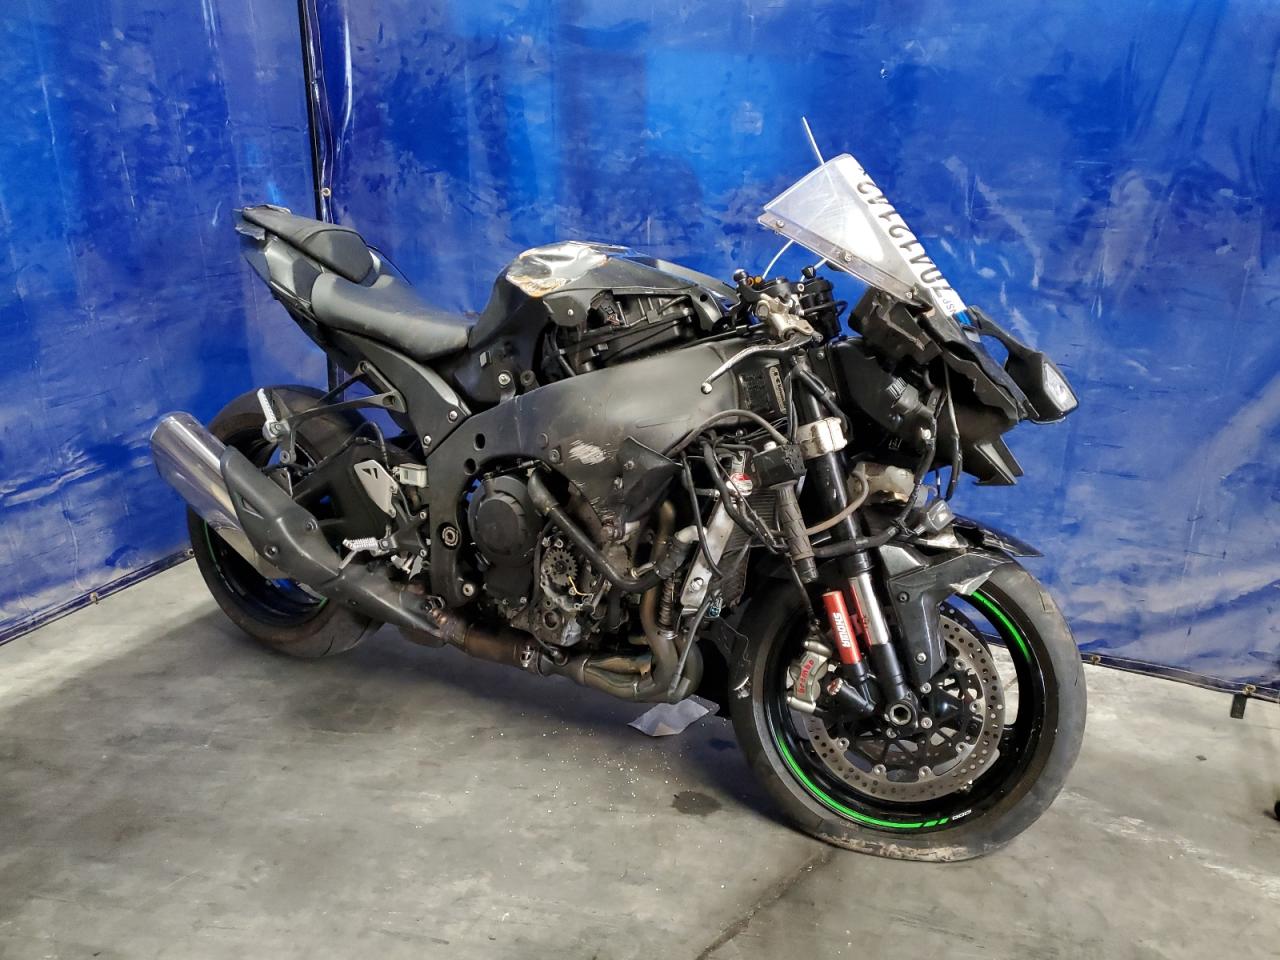 2021 Kawasaki ZX1002 M for sale at Copart Sacramento, CA. Lot 